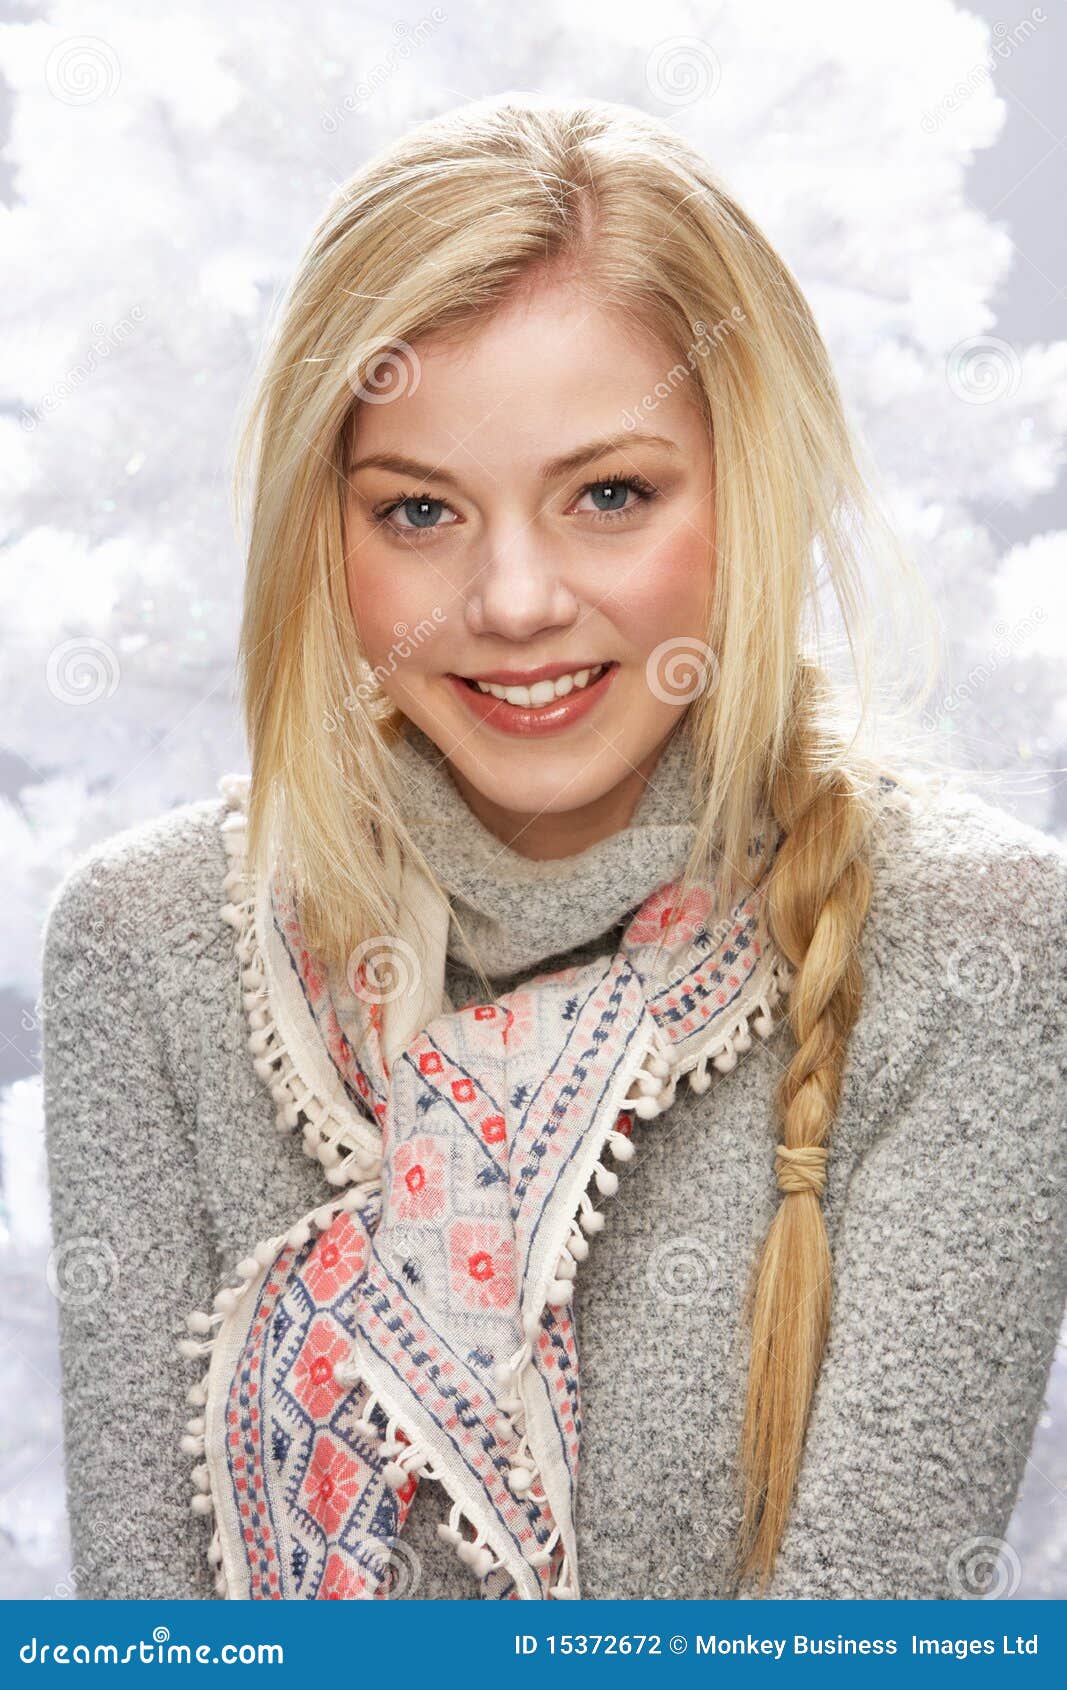 teenage girl wearing cap and knitwear in studio